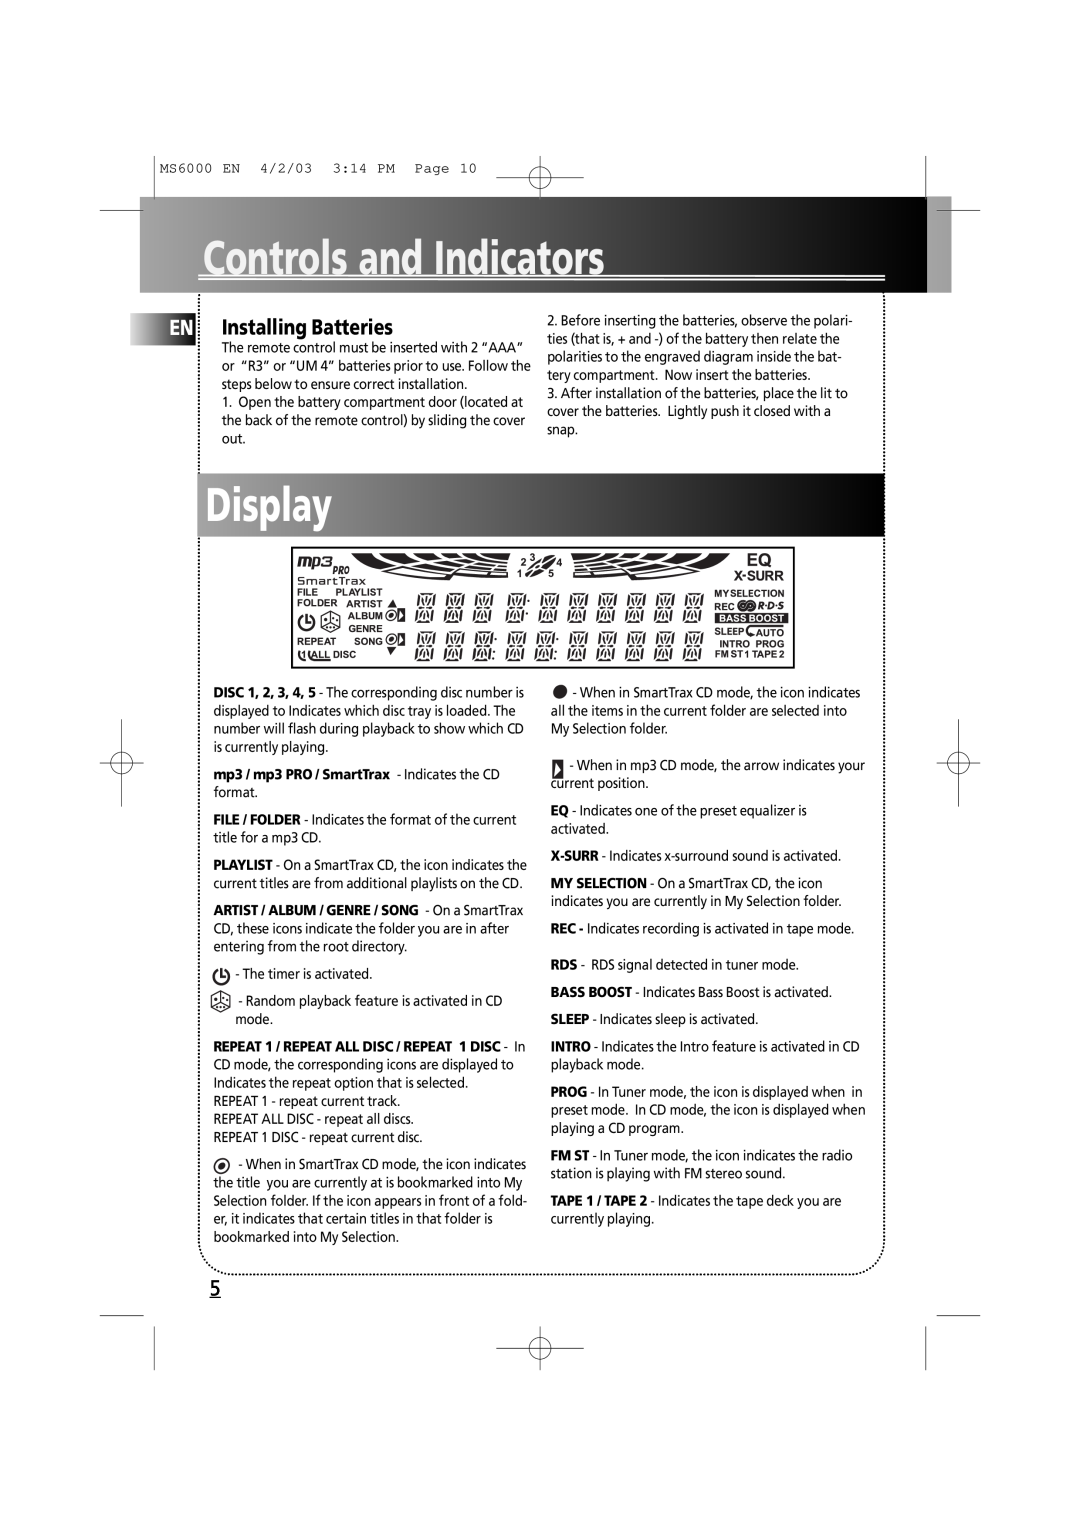 Technicolor - Thomson MS6000 manual Display, Installing Batteries, Controls and Indicators 